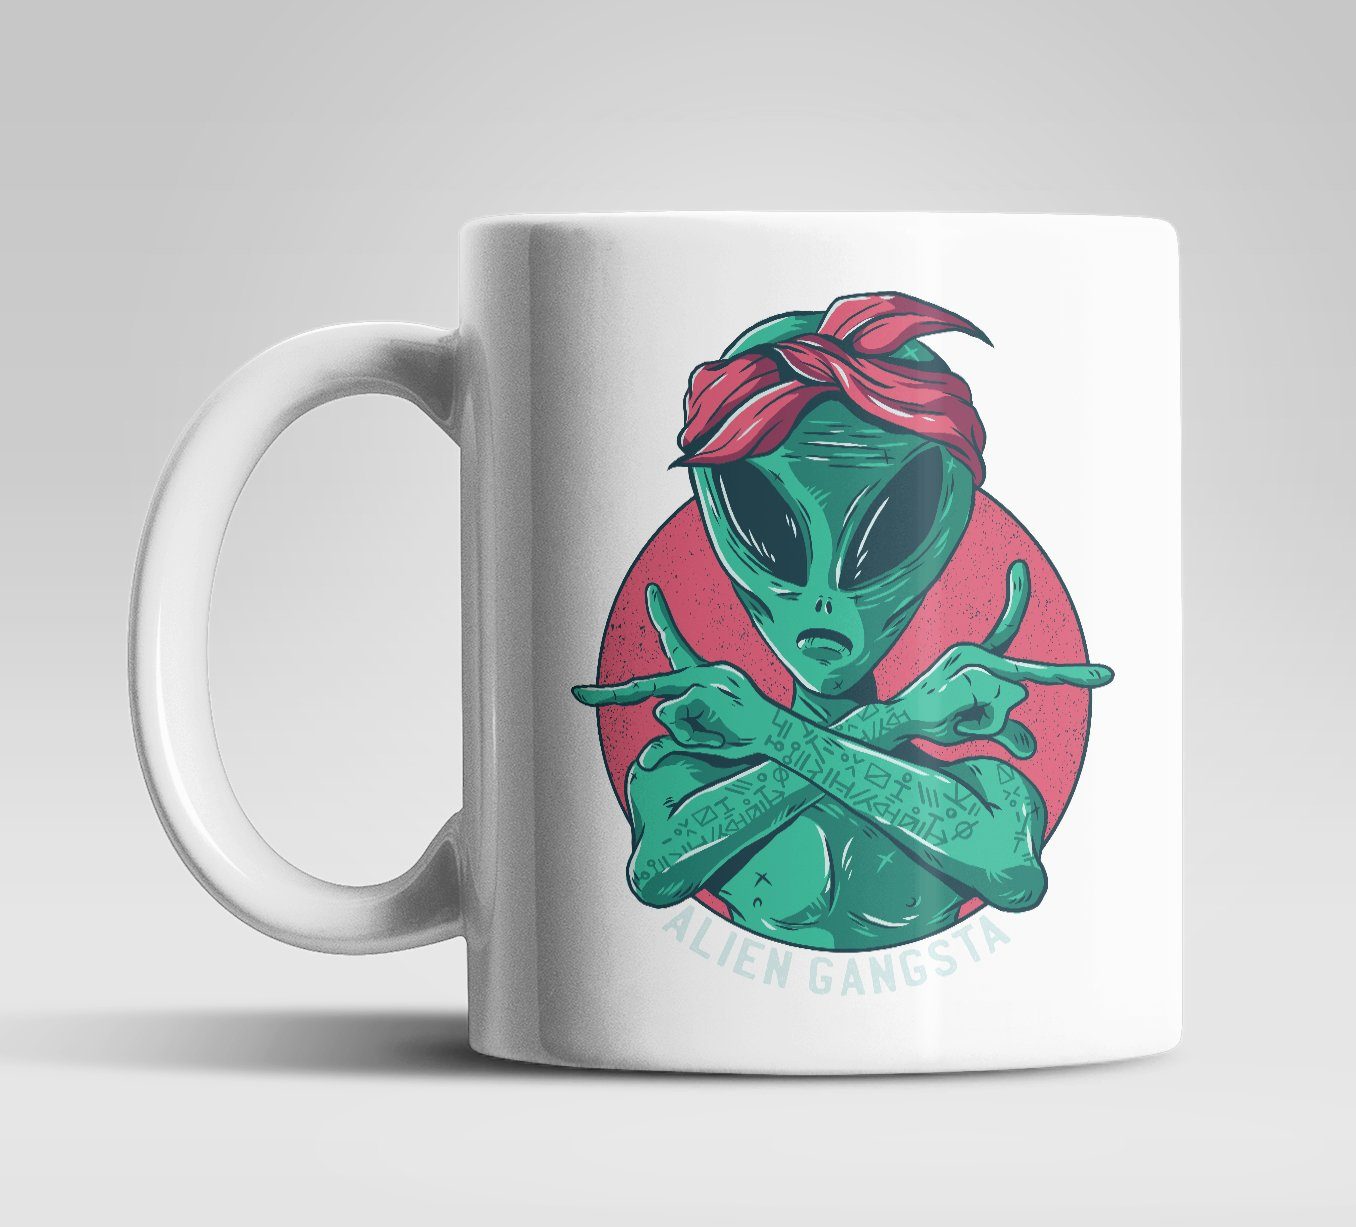 WS-Trend Tasse Alien Gansta Kaffeetasse Teetasse Geschenkidee, keramik, 330 ml